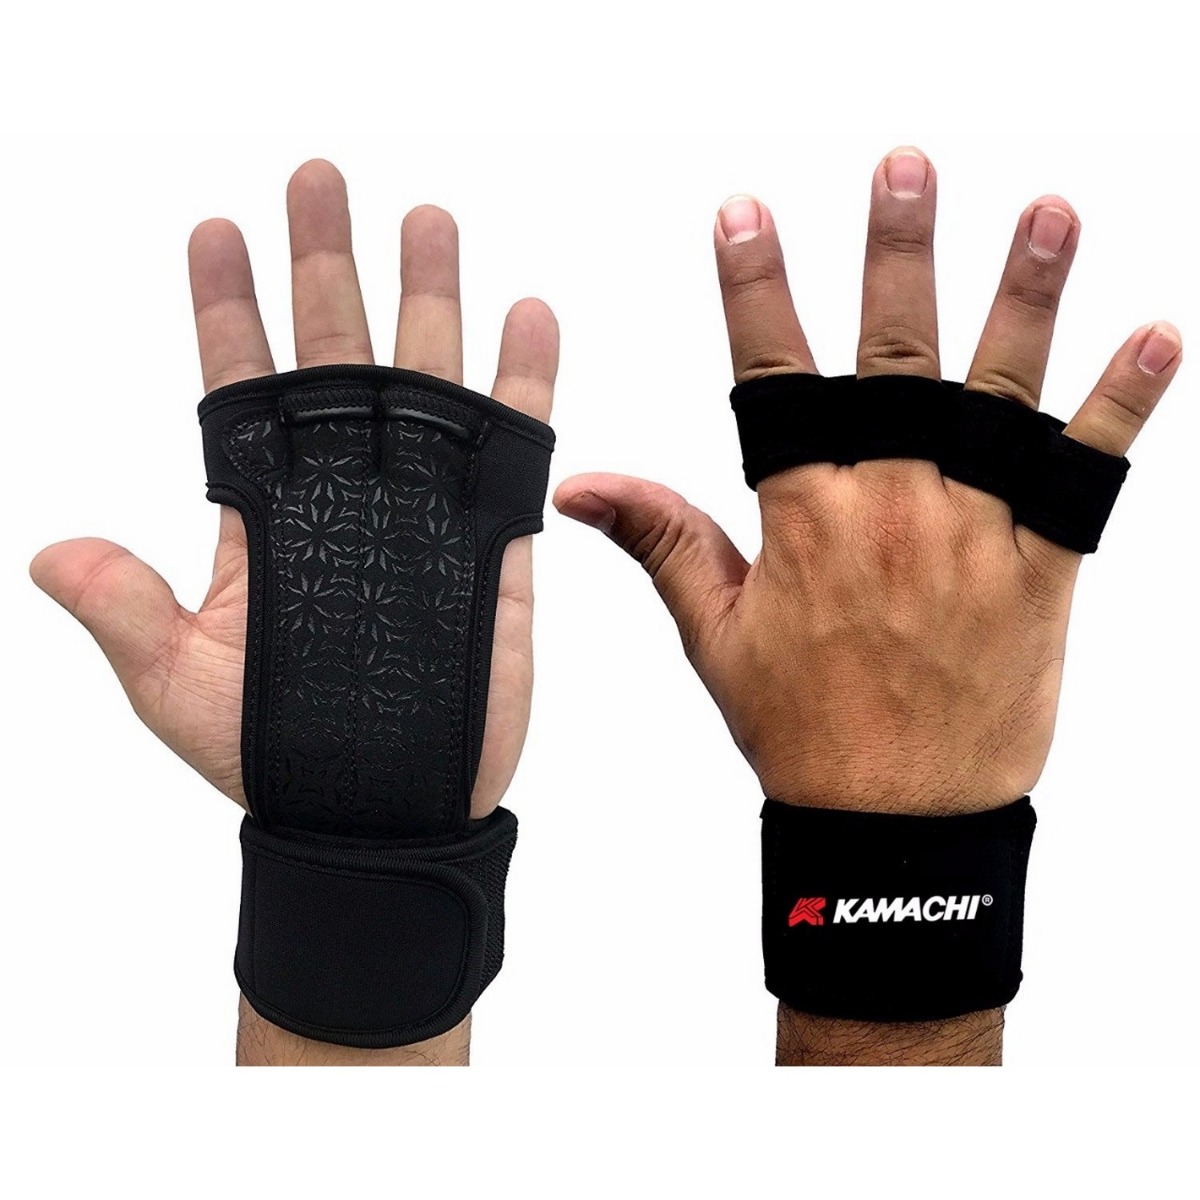 Kamachi FG-07 Fitness Gloves - Black